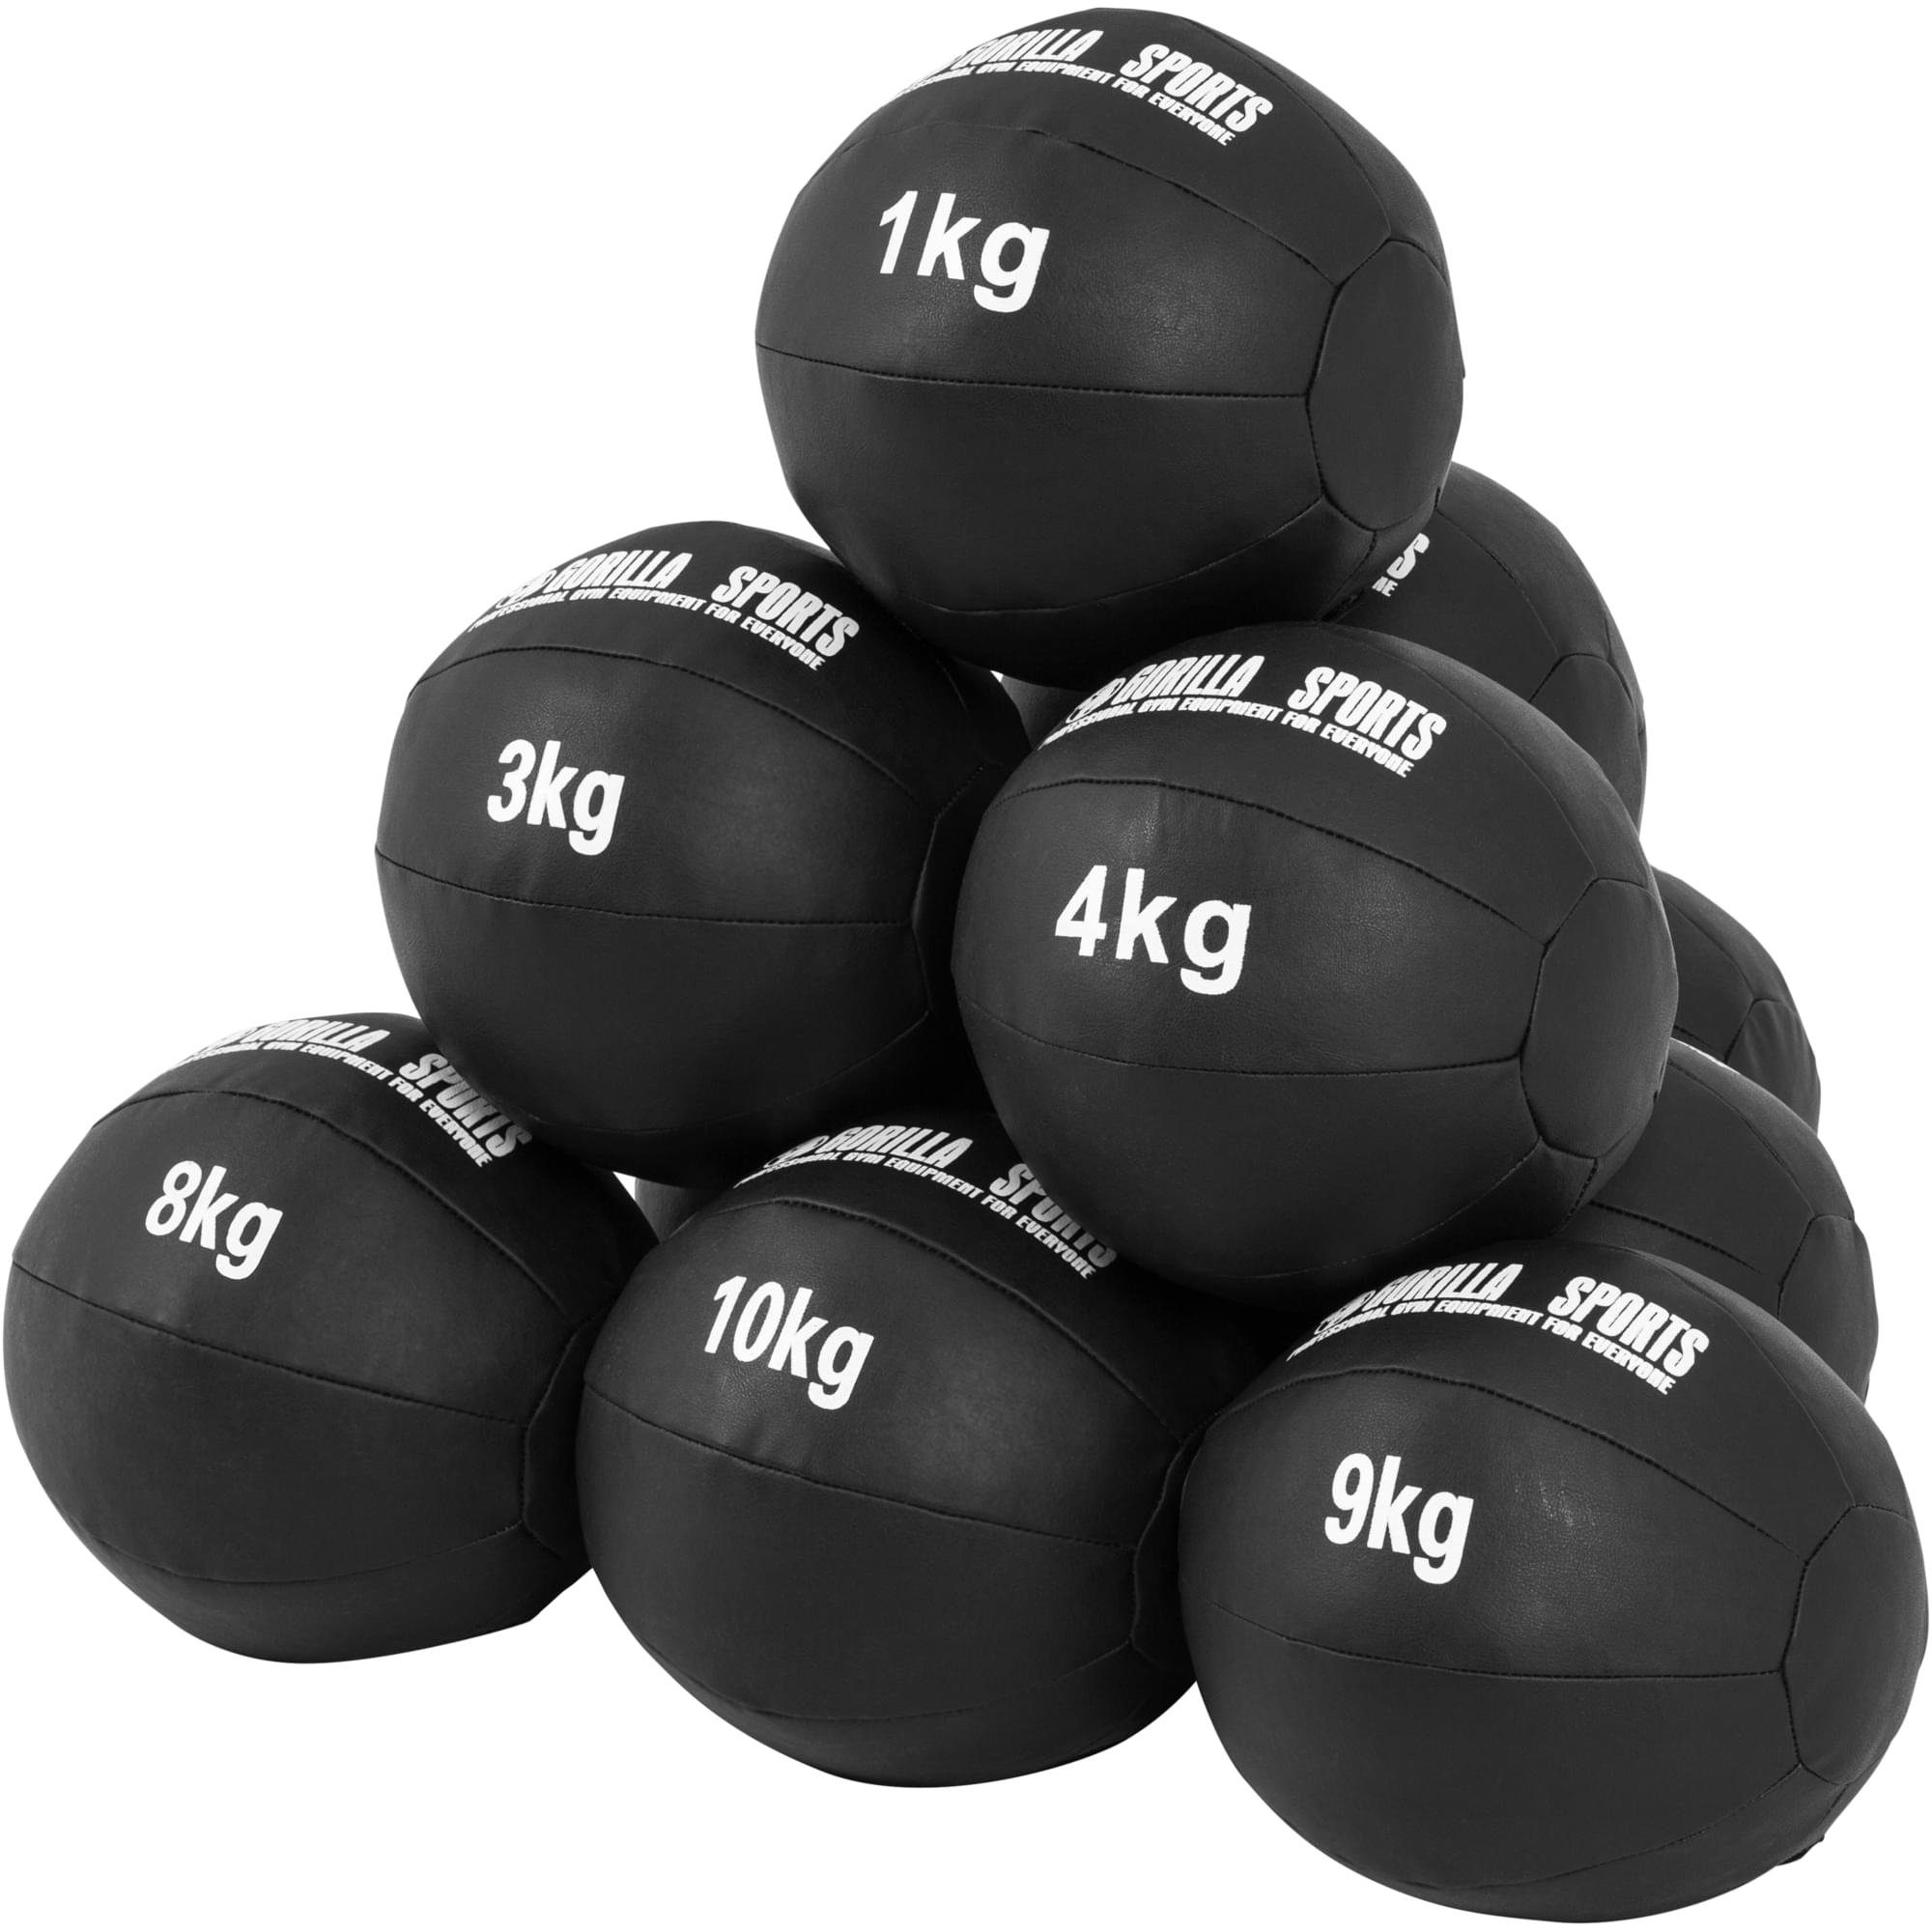 GORILLA SPORTS Medizinball Einzeln/Set, 29cm, aus Leder, Trainingsball, Fitnessball, Gewichtsball Set 55 kg